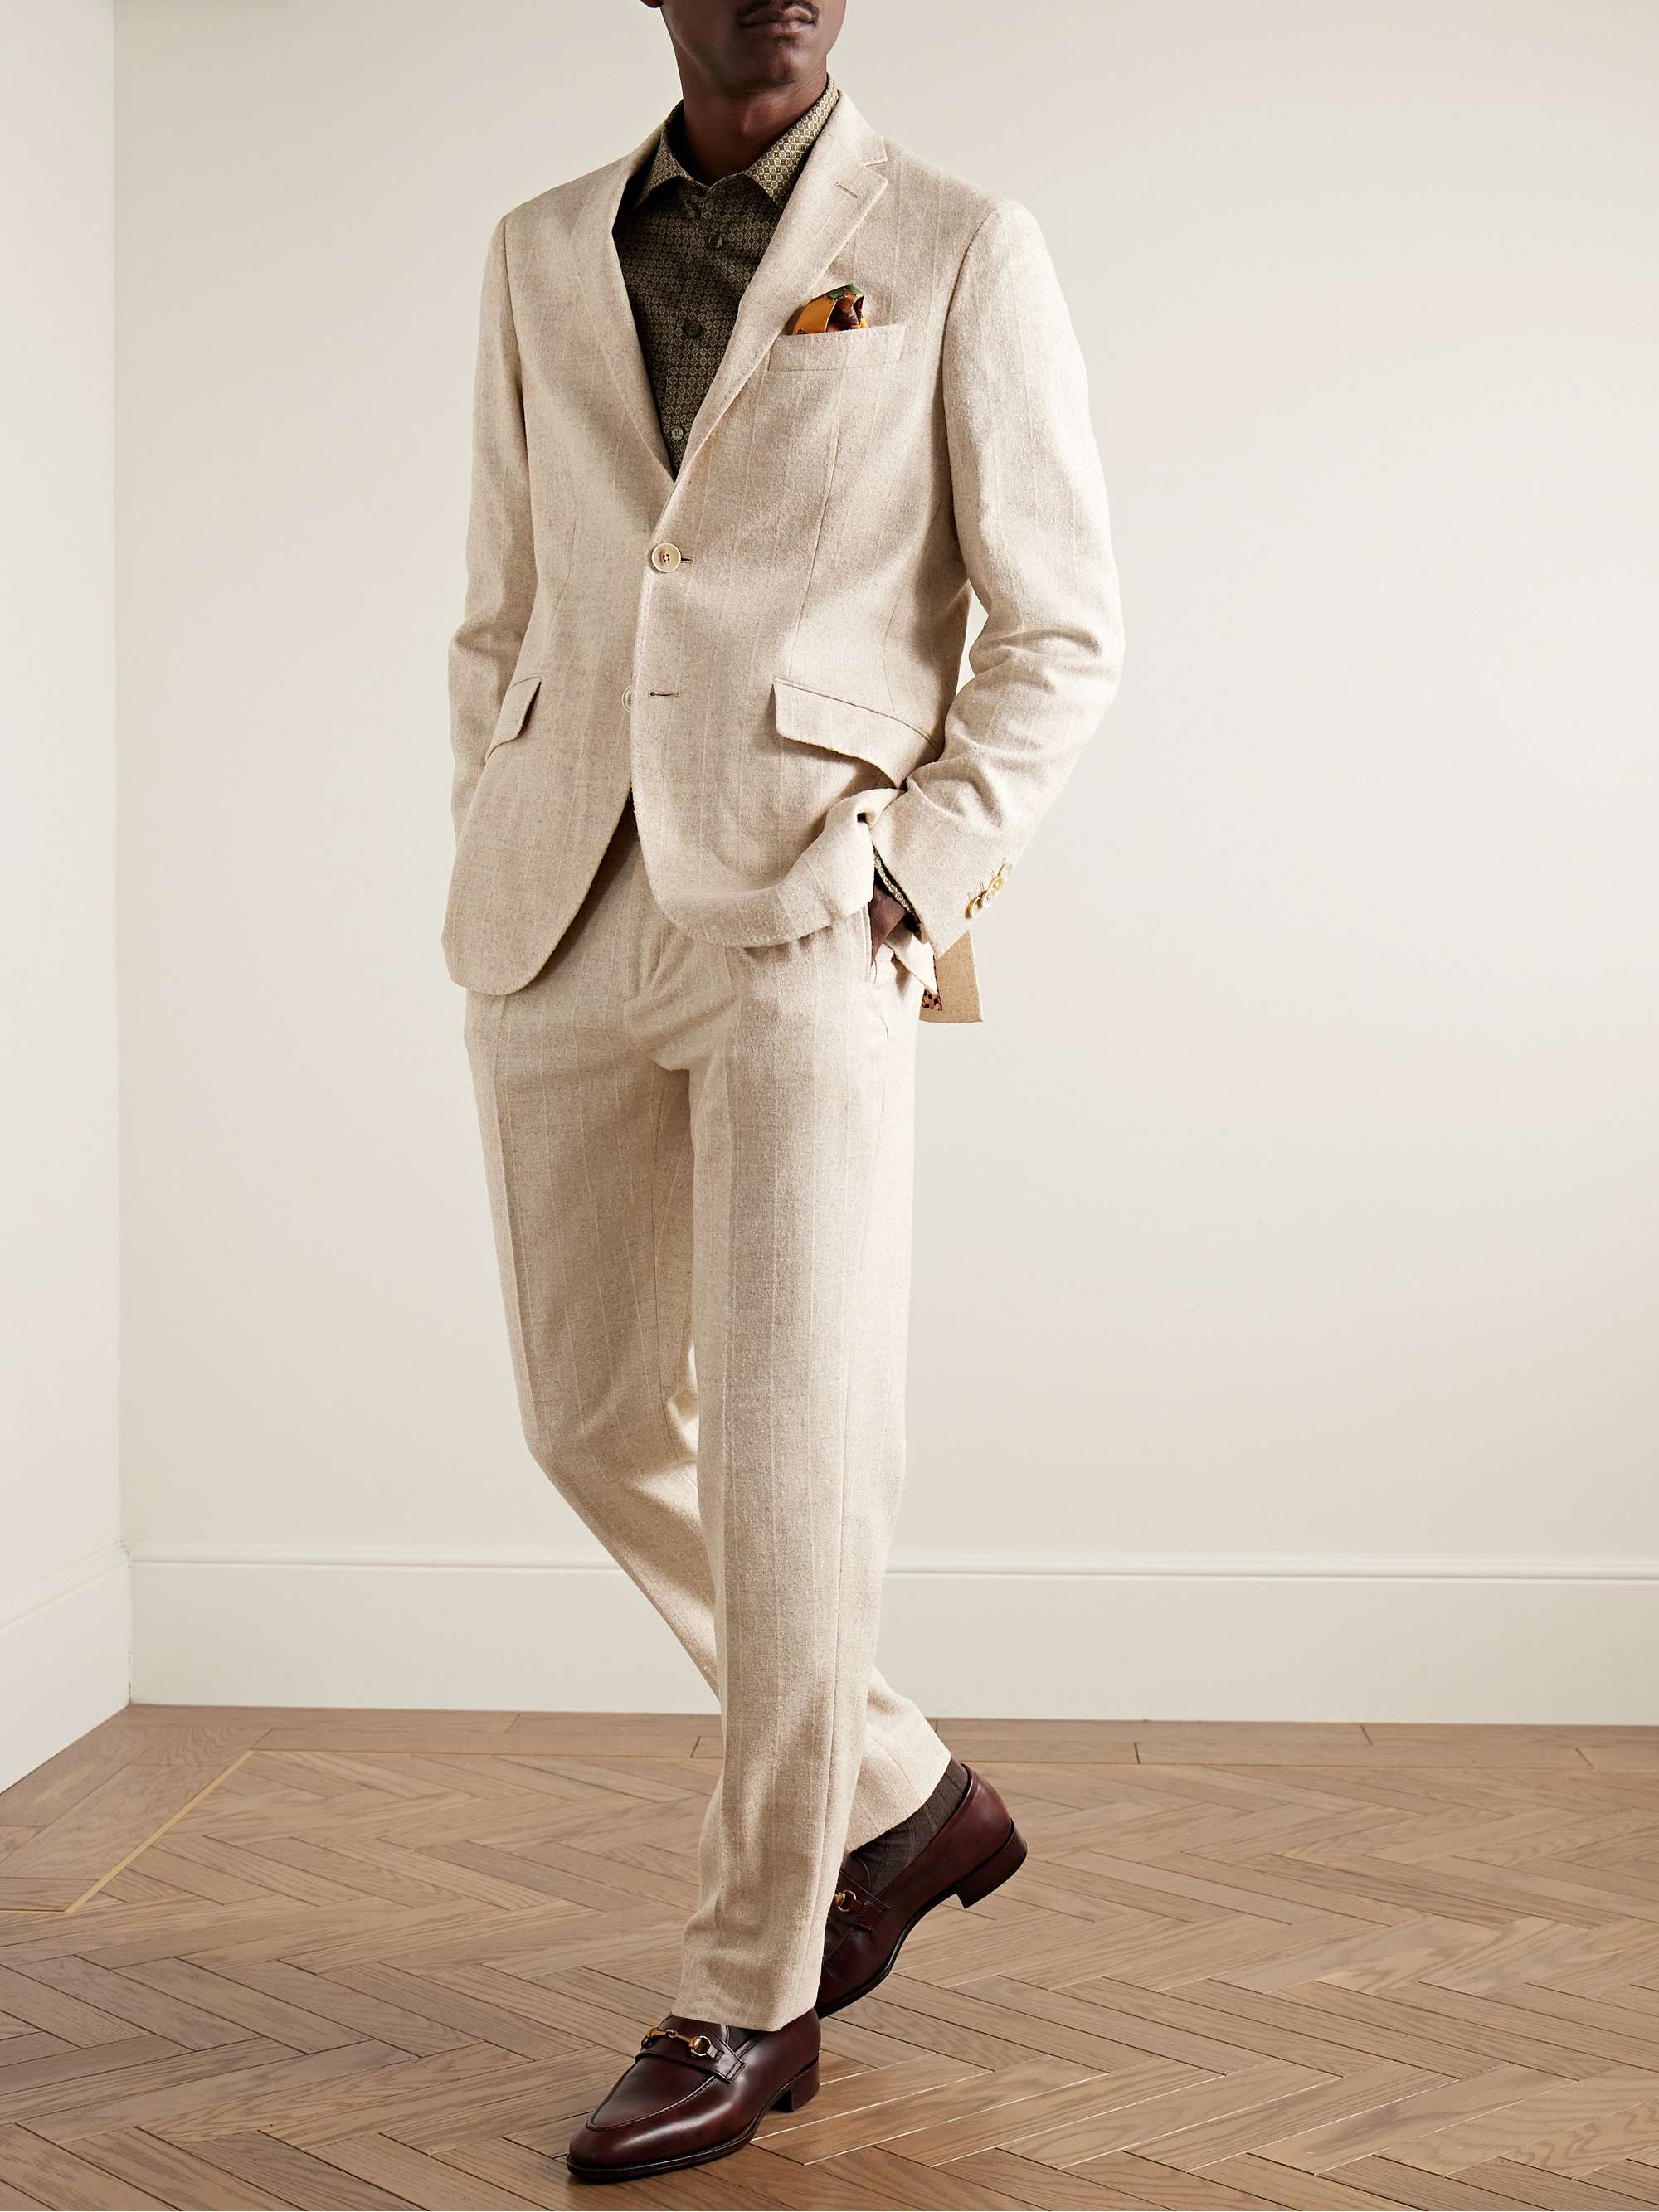 ETRO Checked Alpaca-Blend Suit Jacket for Men | MR PORTER